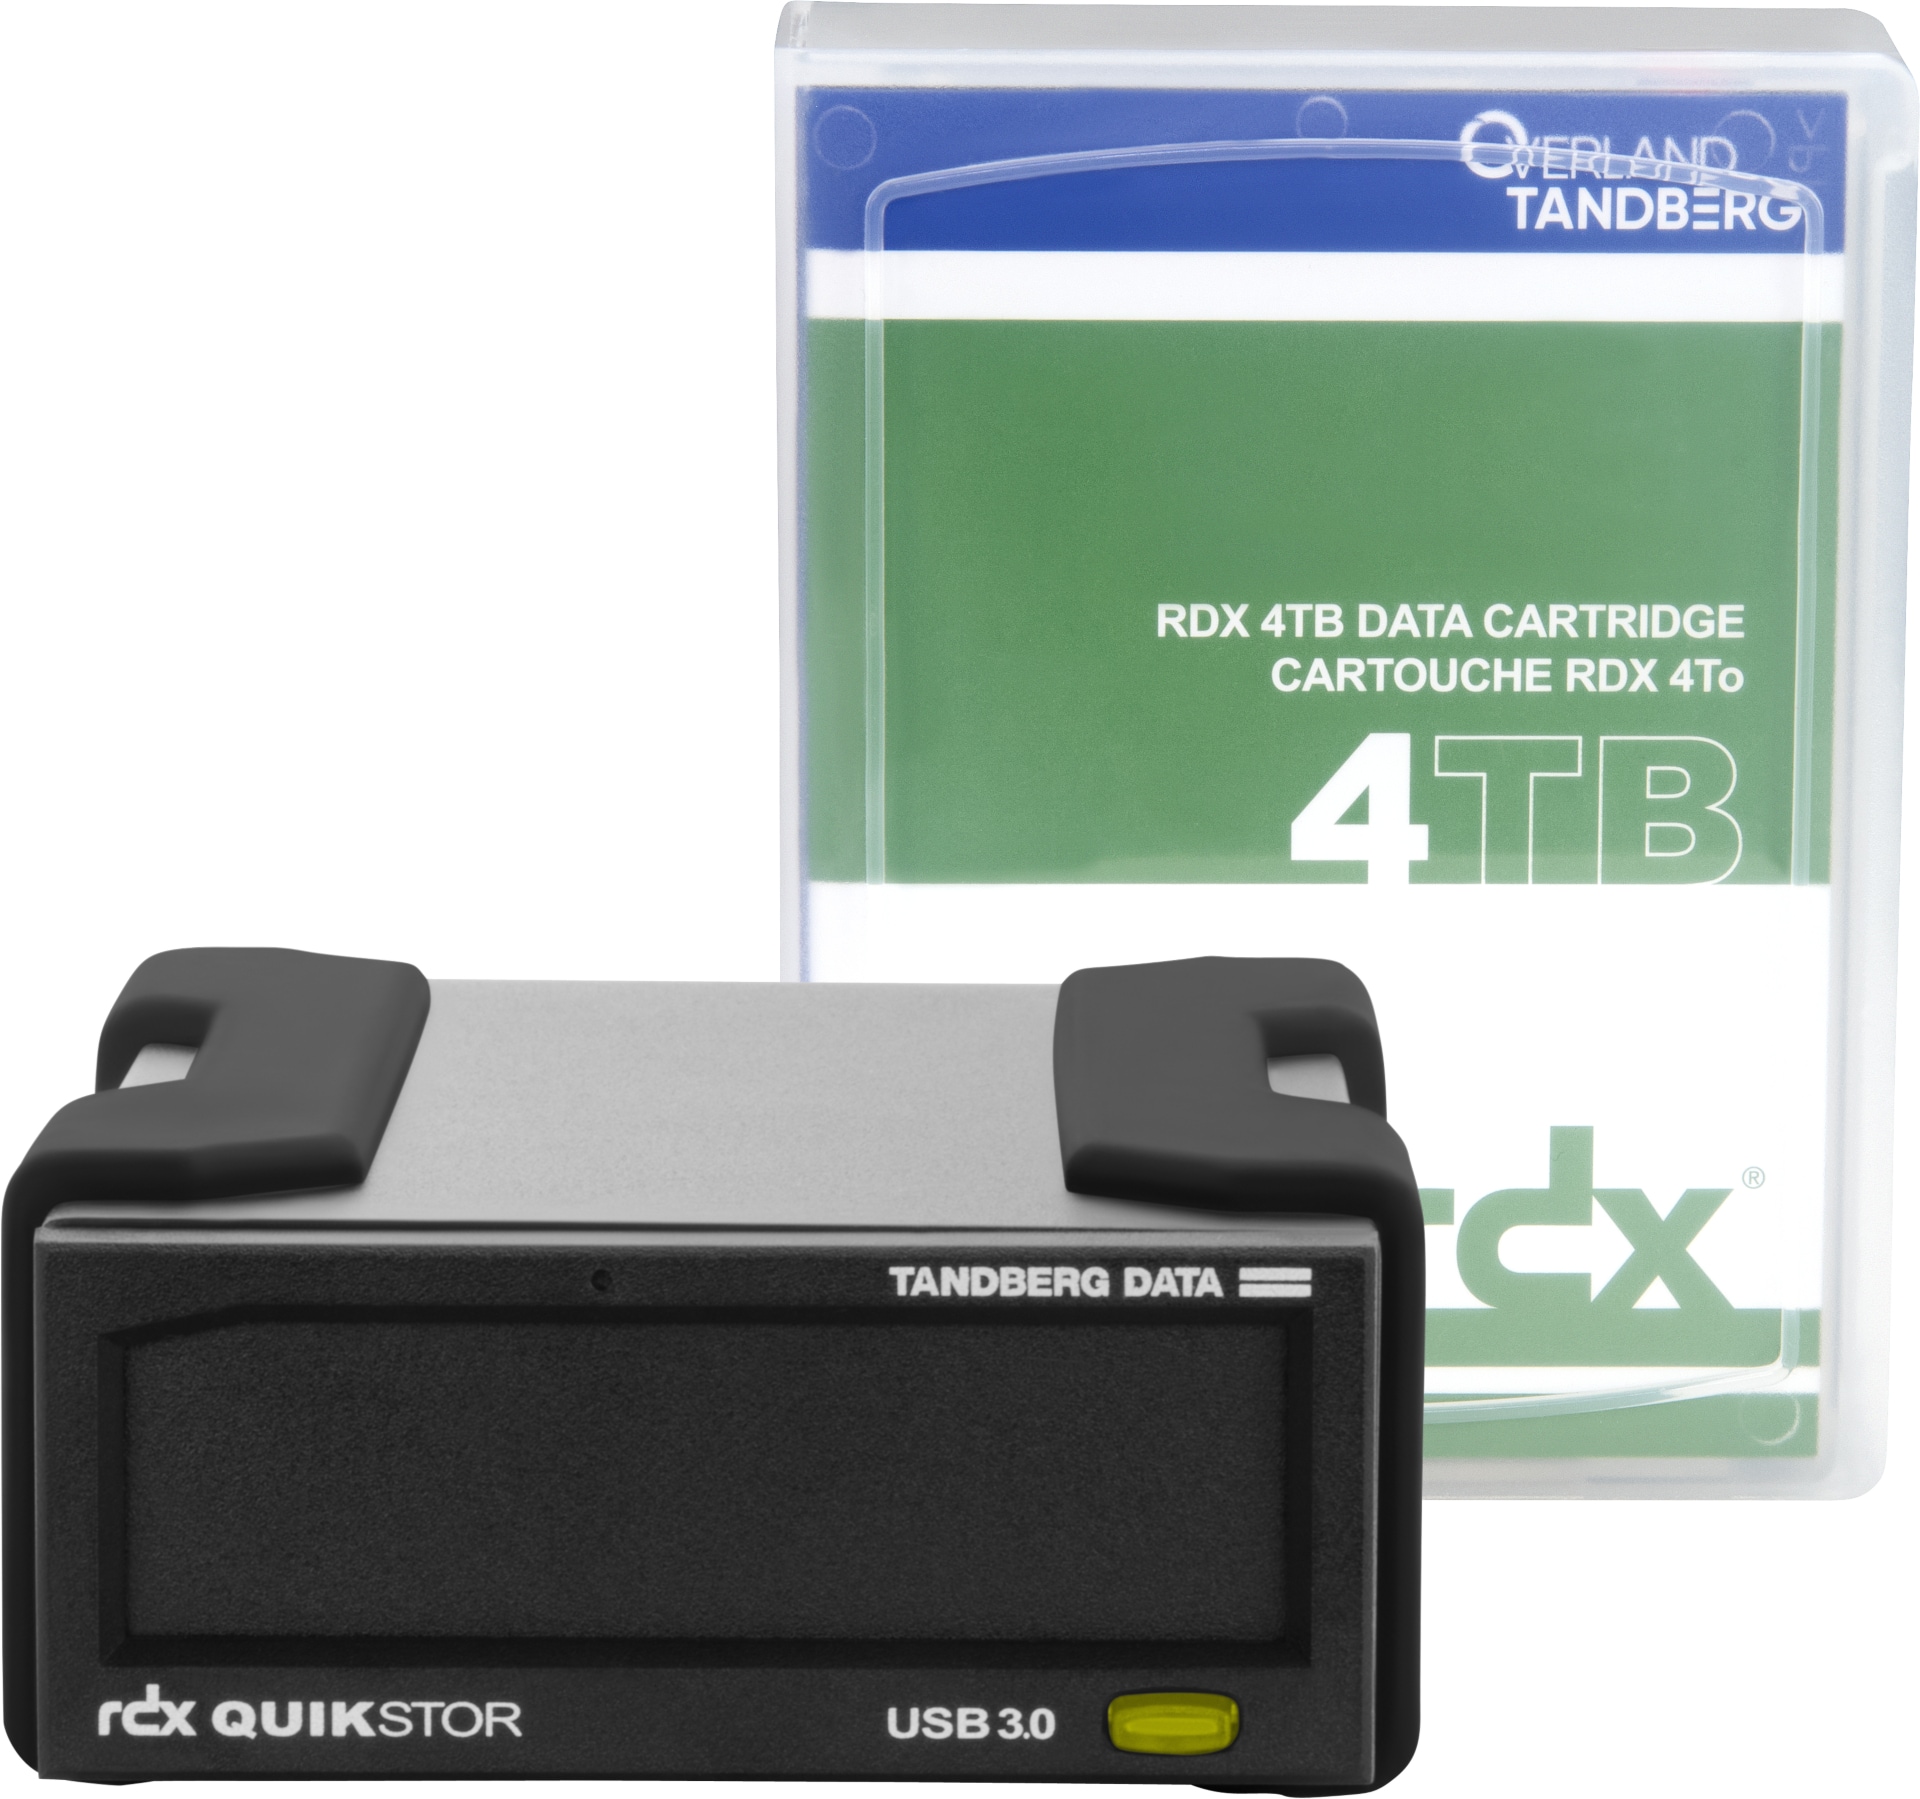 Tandberg RDX QuikStor - RDX drive - SuperSpeed USB 3.0 - external - with 4